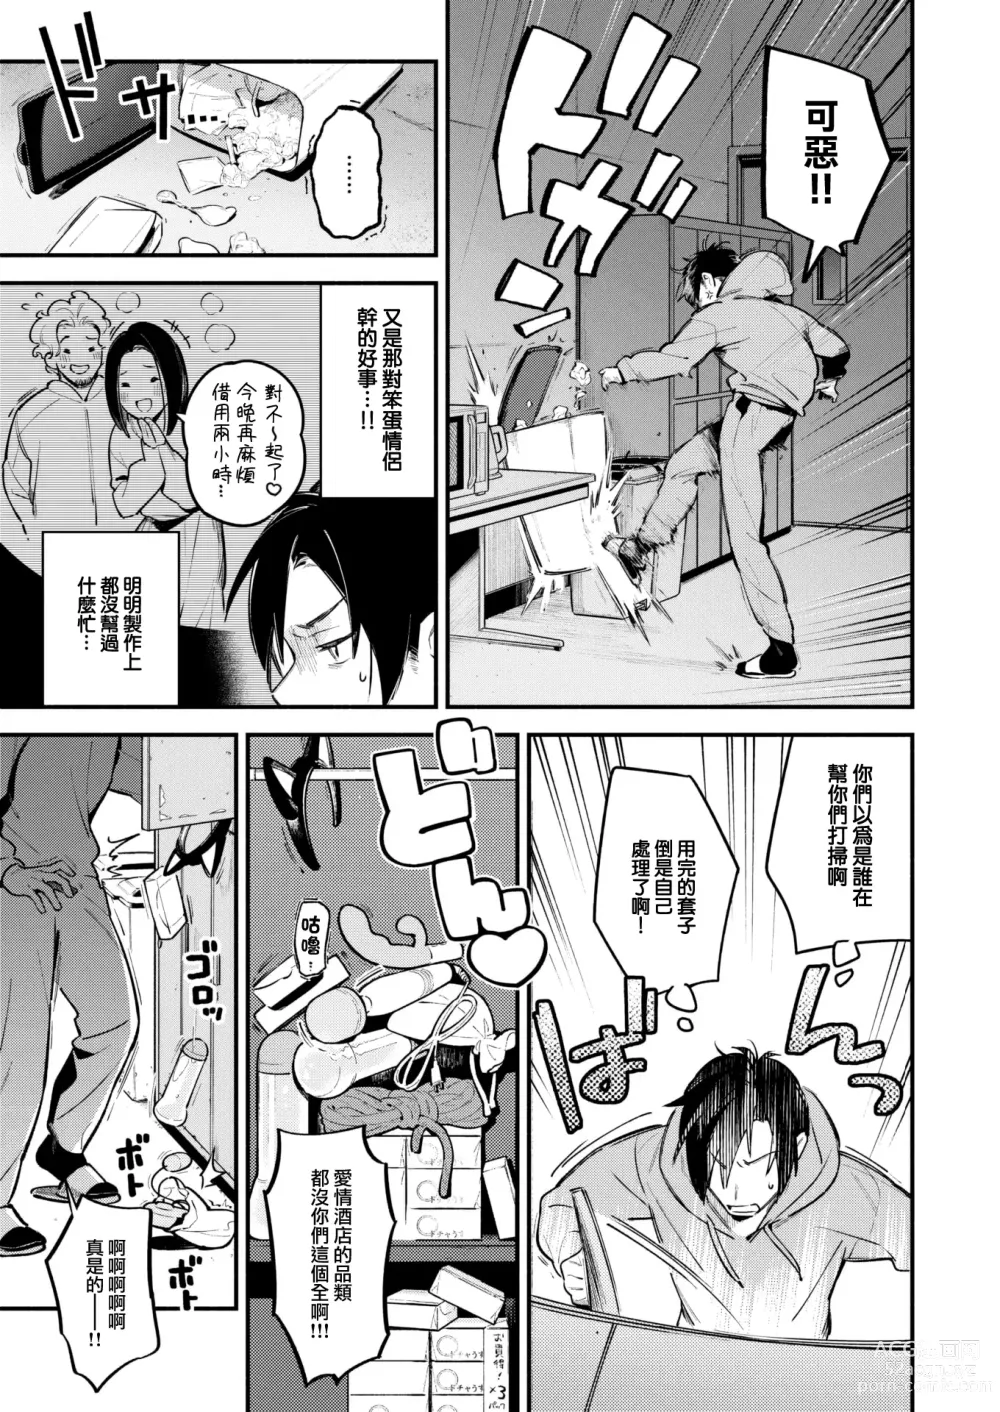 Page 4 of manga Latelier (decensored)